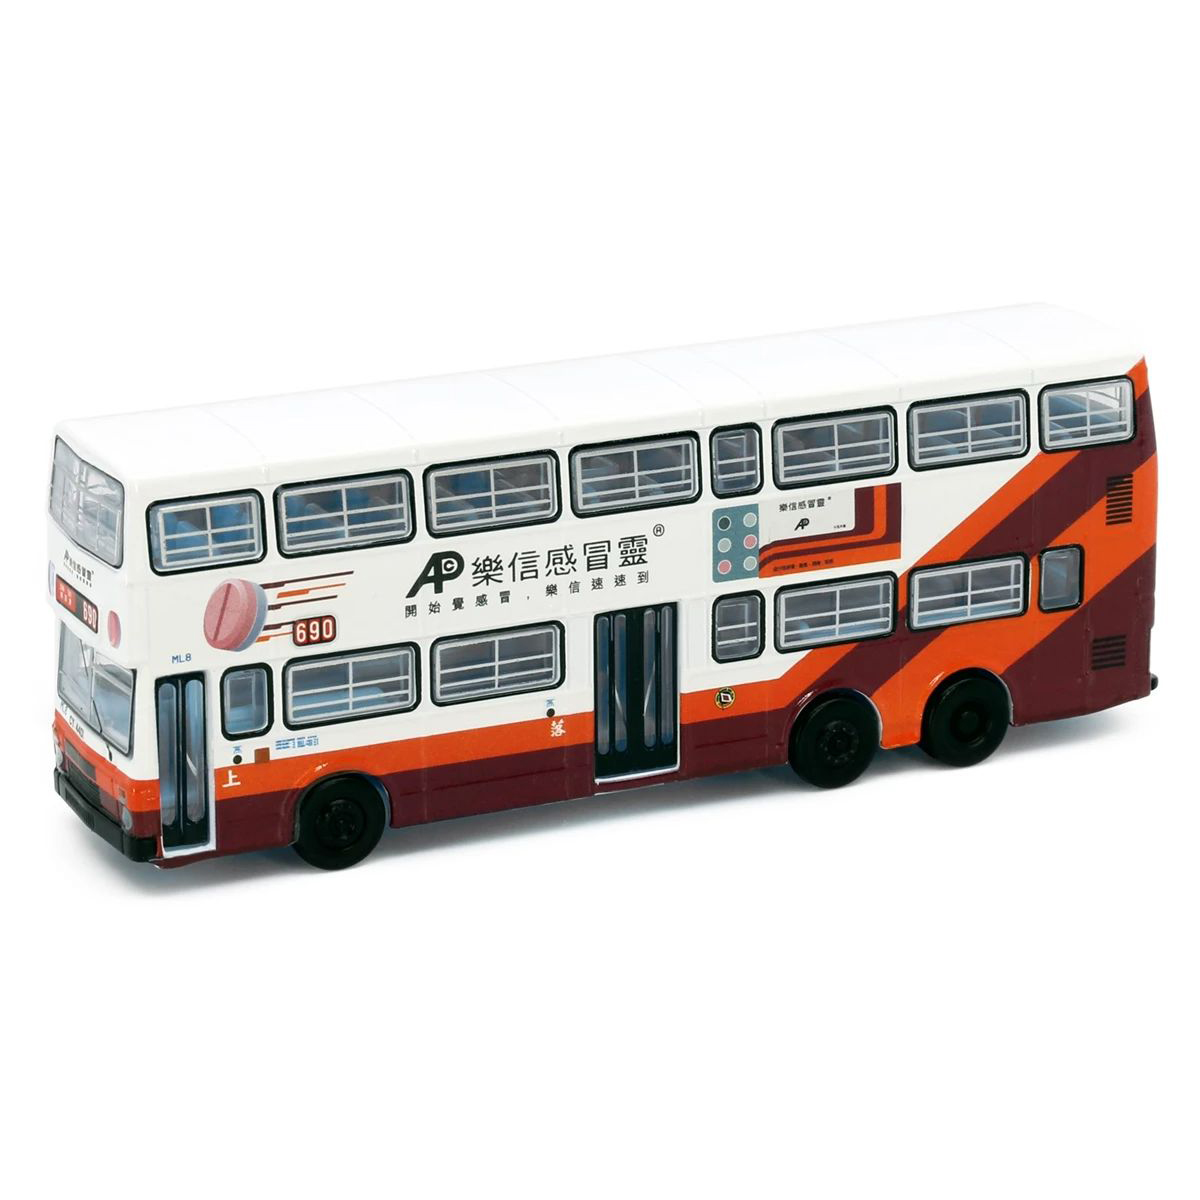 TINY微影城市中巴 MCW Metrobus 12m乐信感冒灵(690)合金车模